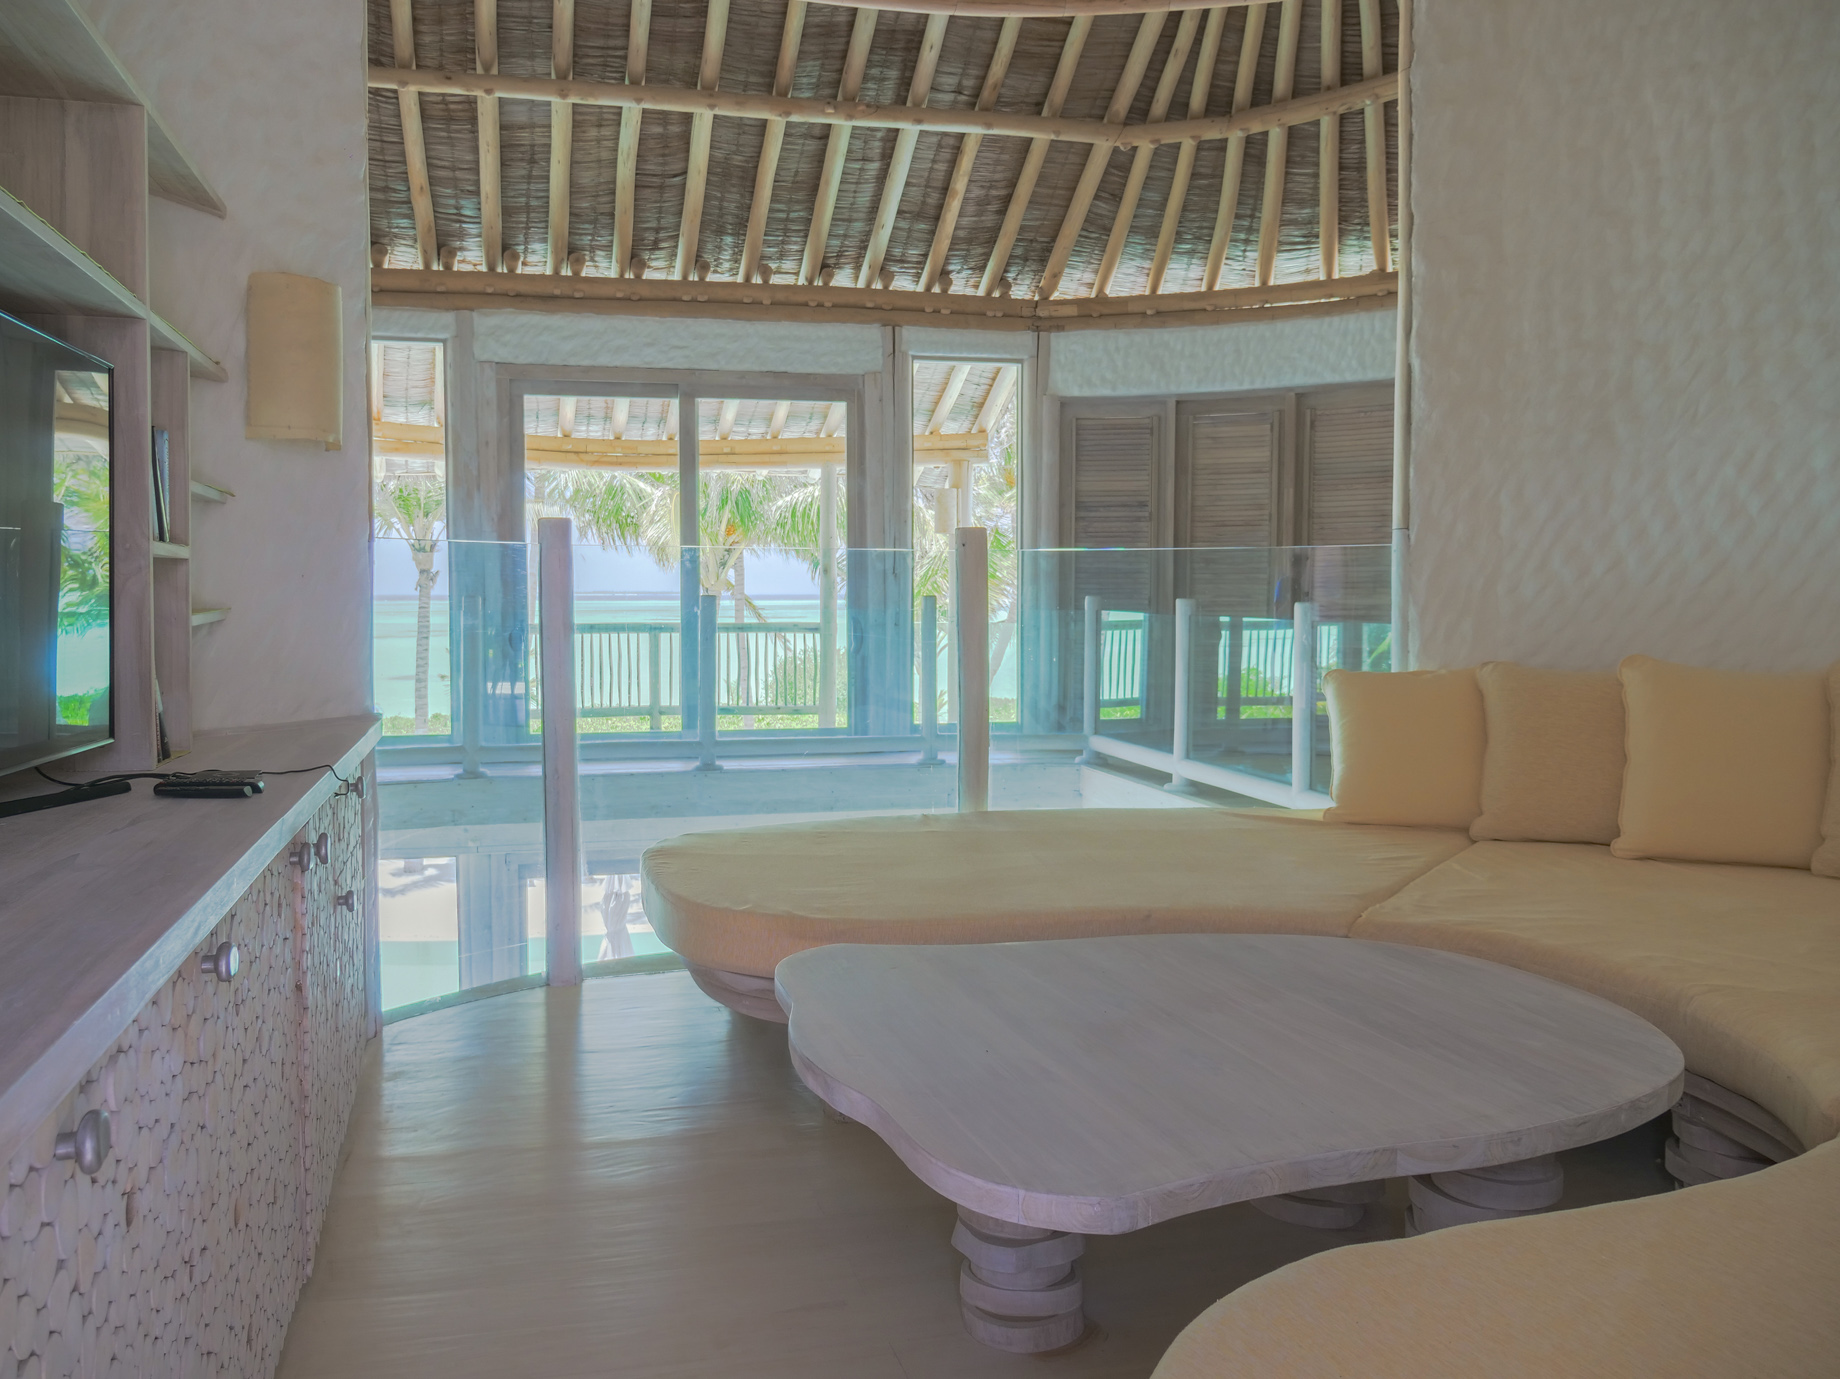 Soneva Jani Resort – Noonu Atoll, Medhufaru, Maldives – 4 Bedroom Island Reserve Villa Lounge